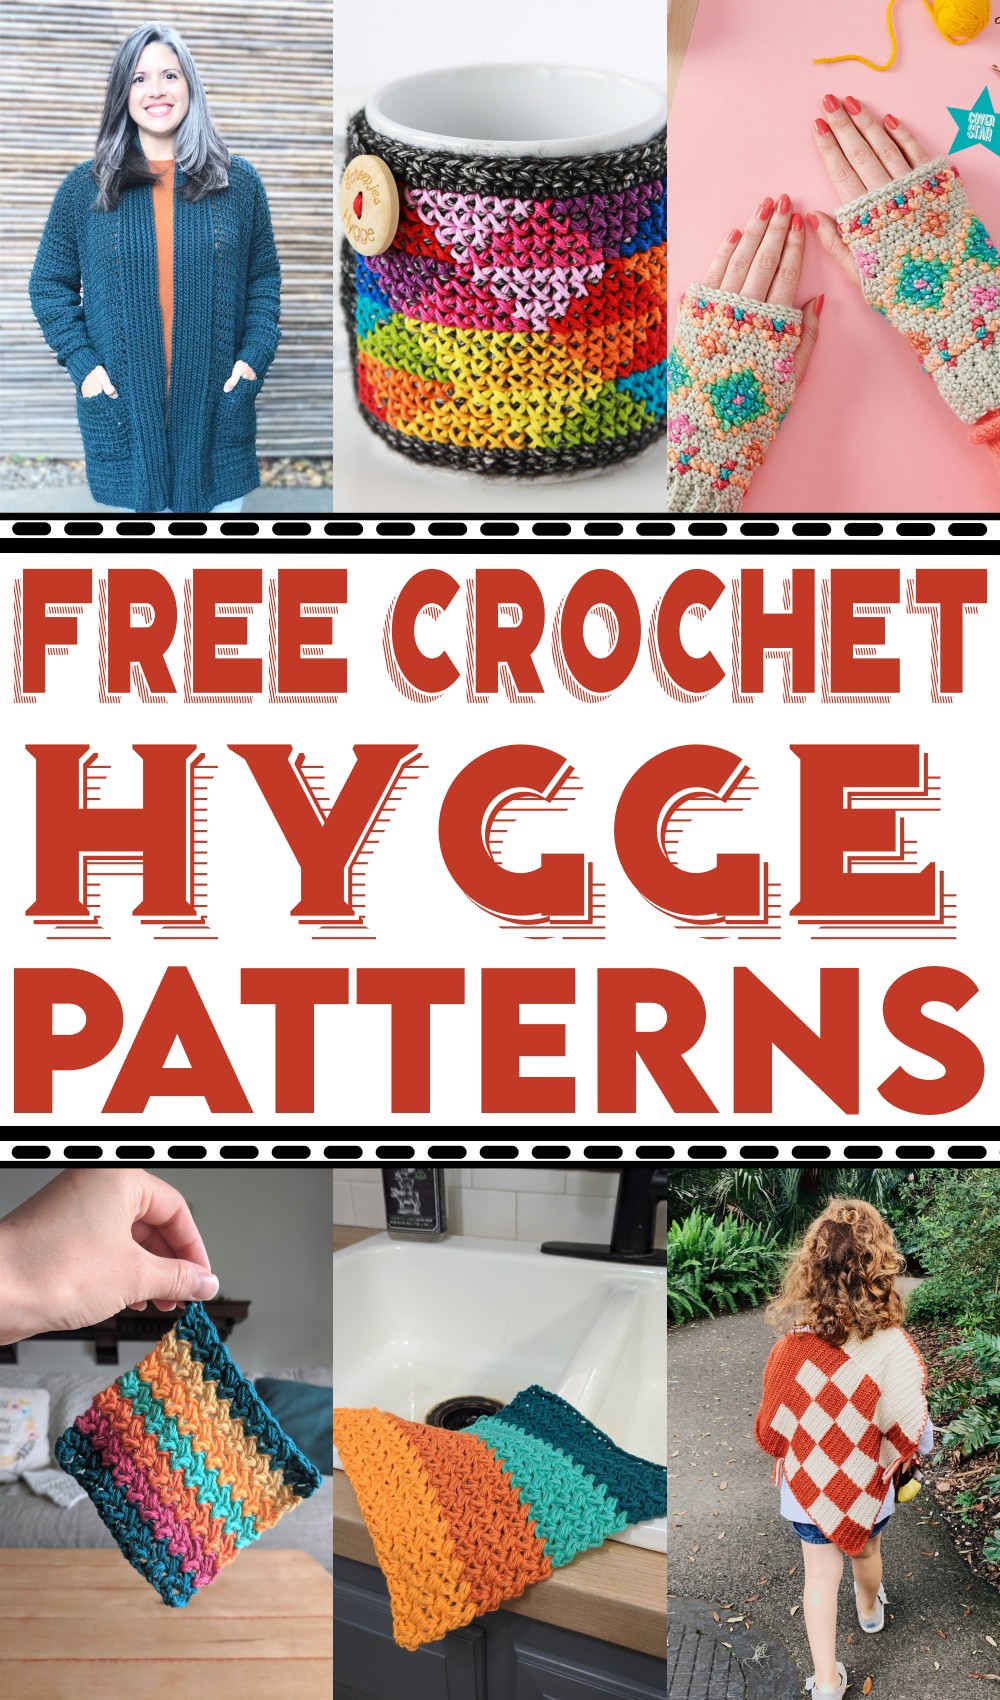 Free Crochet Hygge Patterns